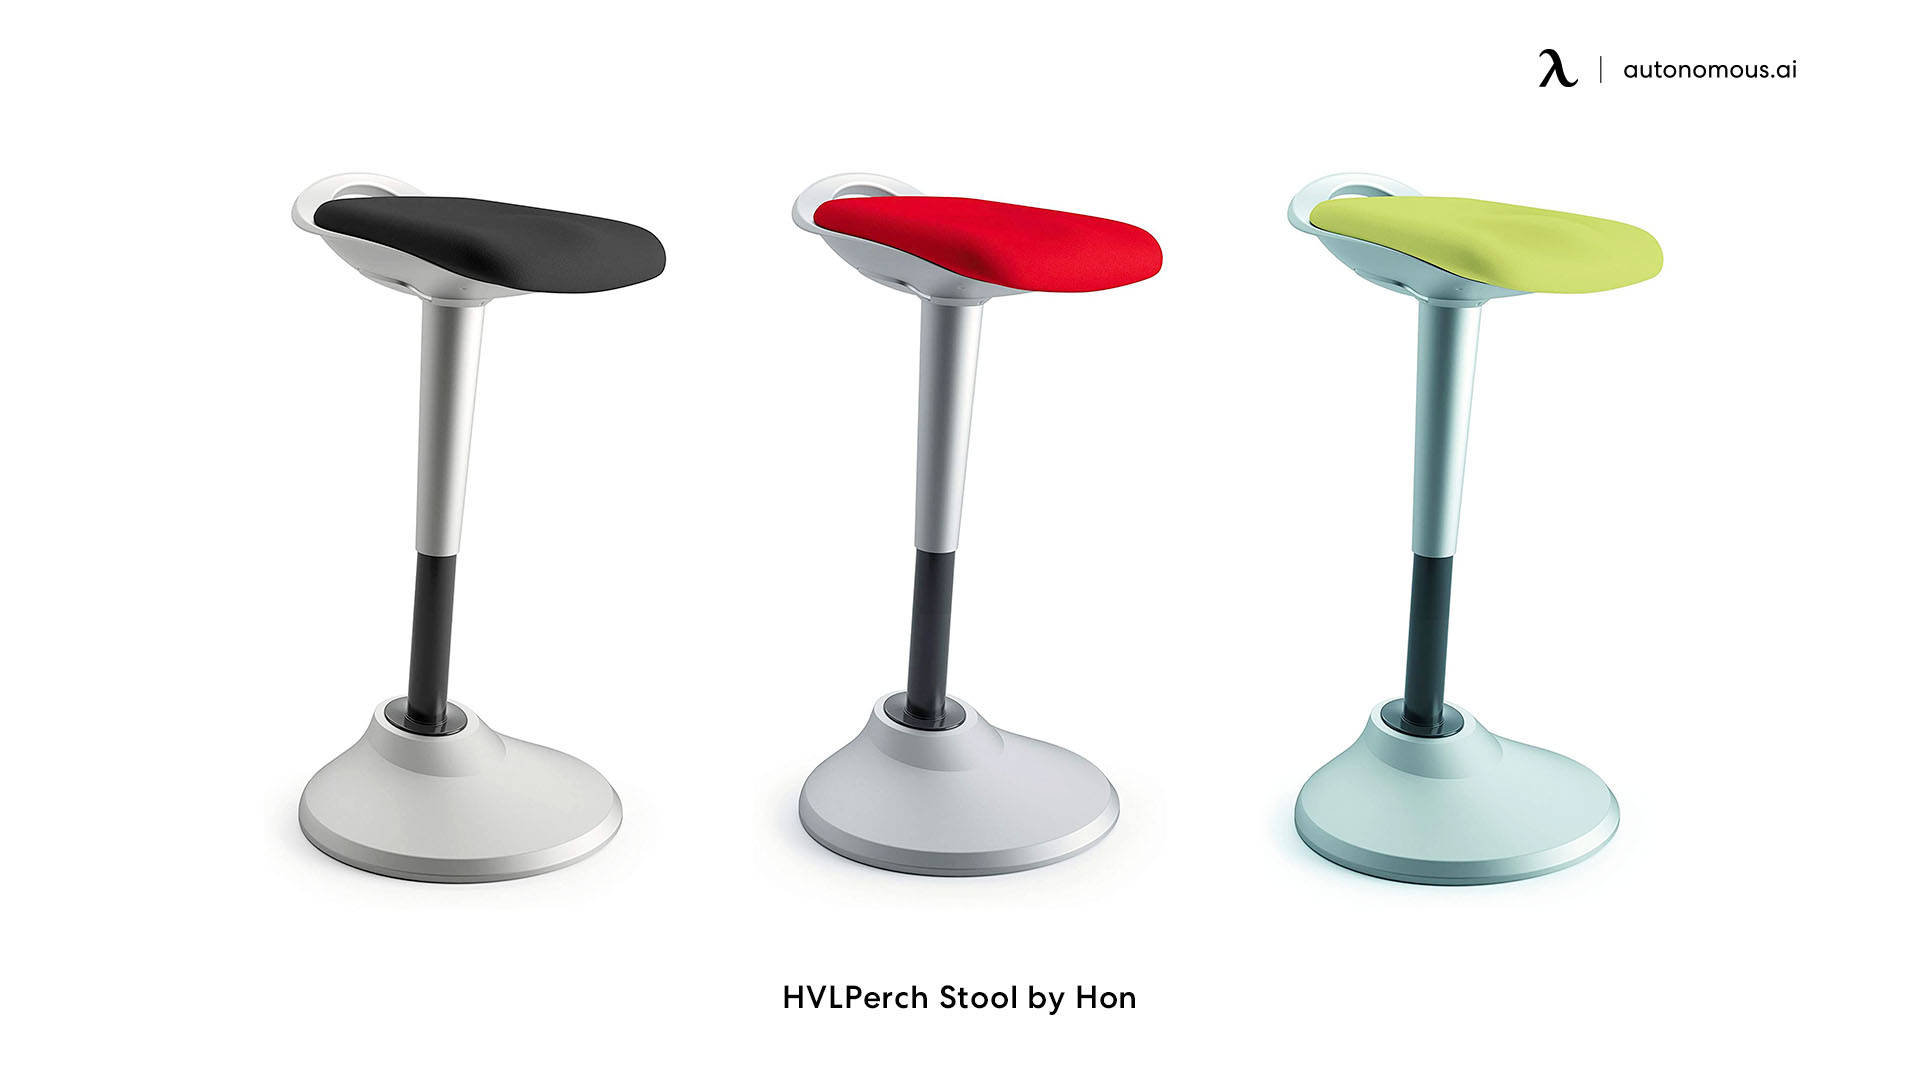 HVLPerch ergonomic stool chair by Hon